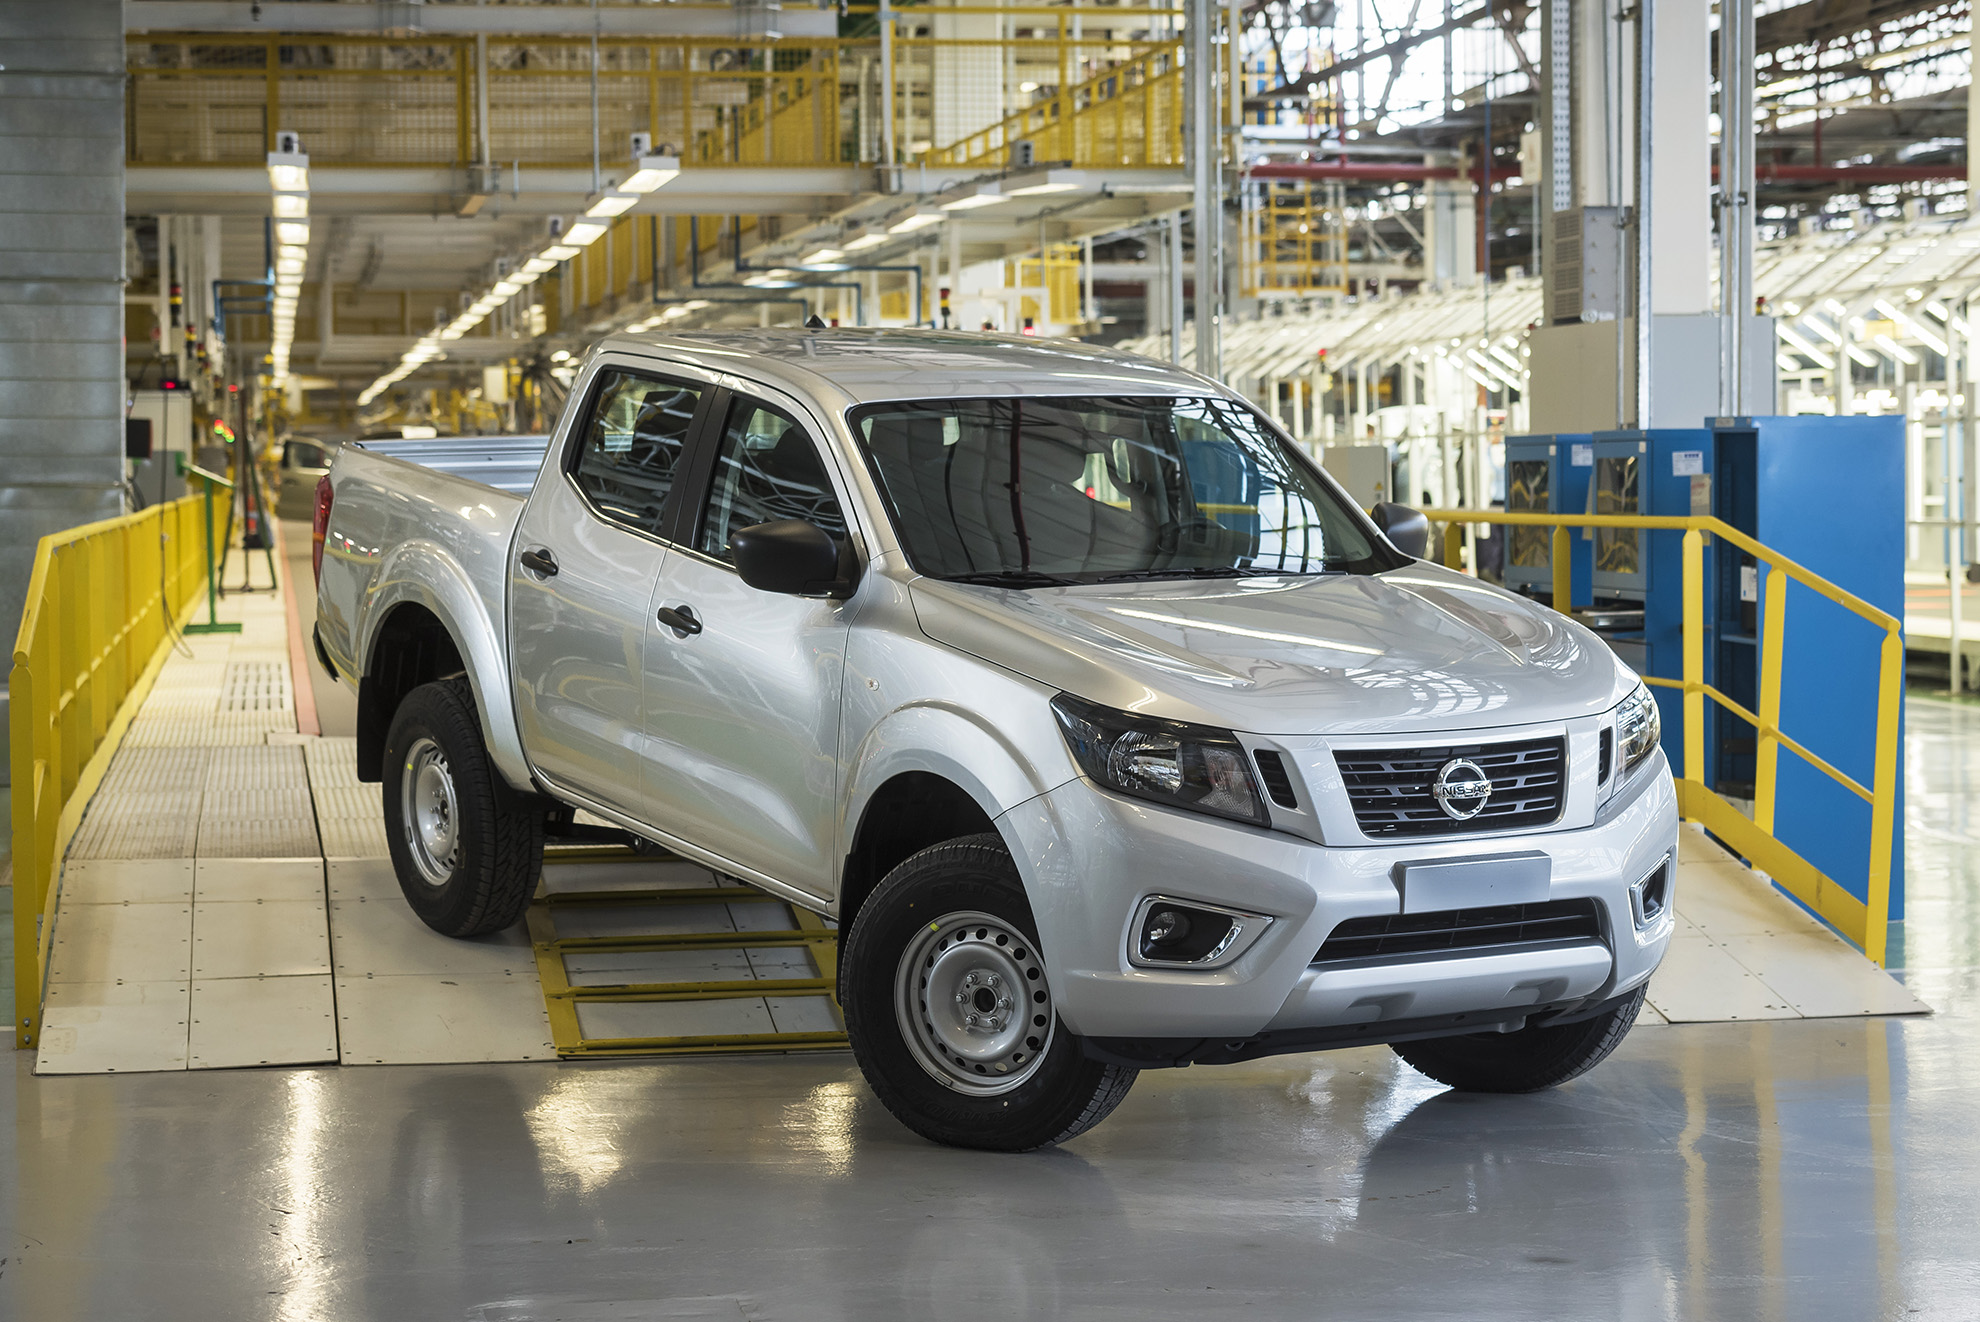 Nissan expands Navara production as global pickup demand grows